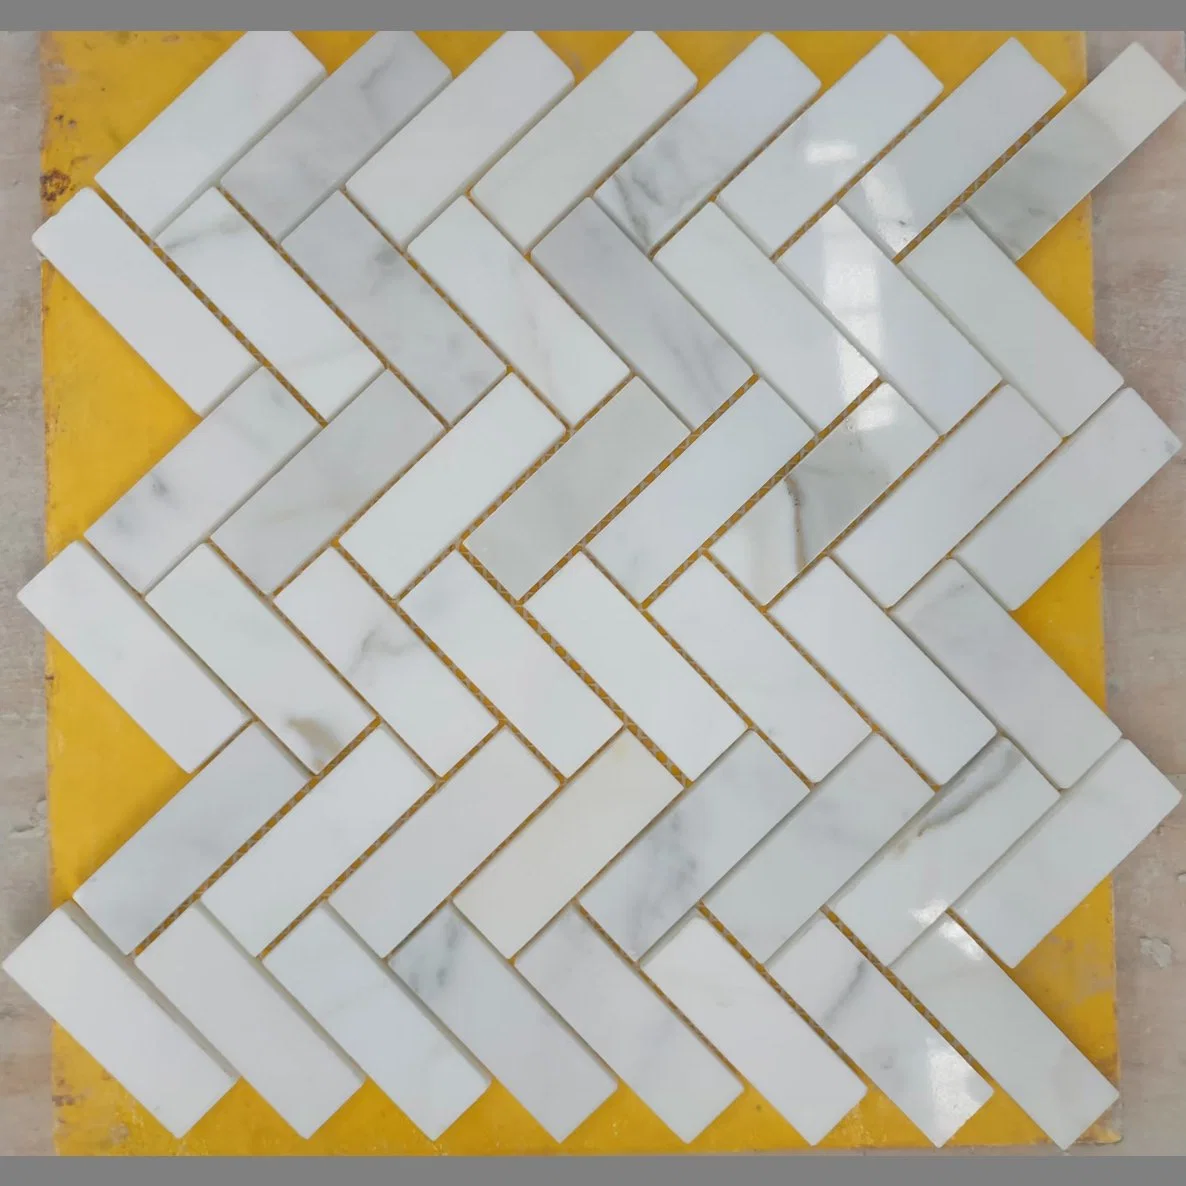 China Building Material Ceramic Tile Floor Tile Bathroom Tile Mosaic Tile Marble Tile Flooring Tile Stone Tile Stone Mosaic